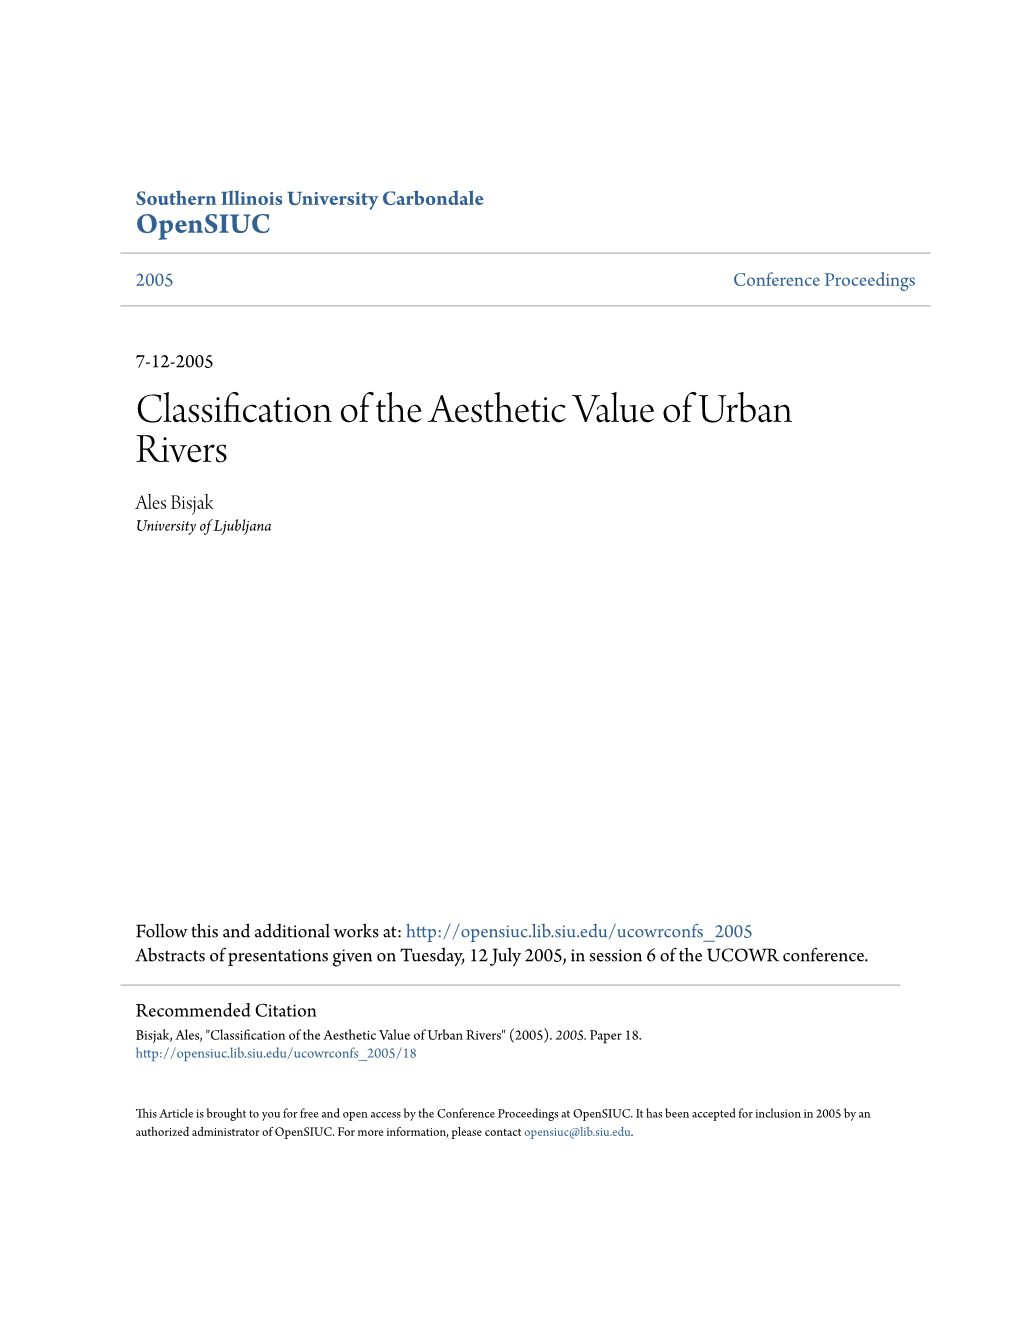 Classification of the Aesthetic Value of Urban Rivers Ales Bisjak University of Ljubljana